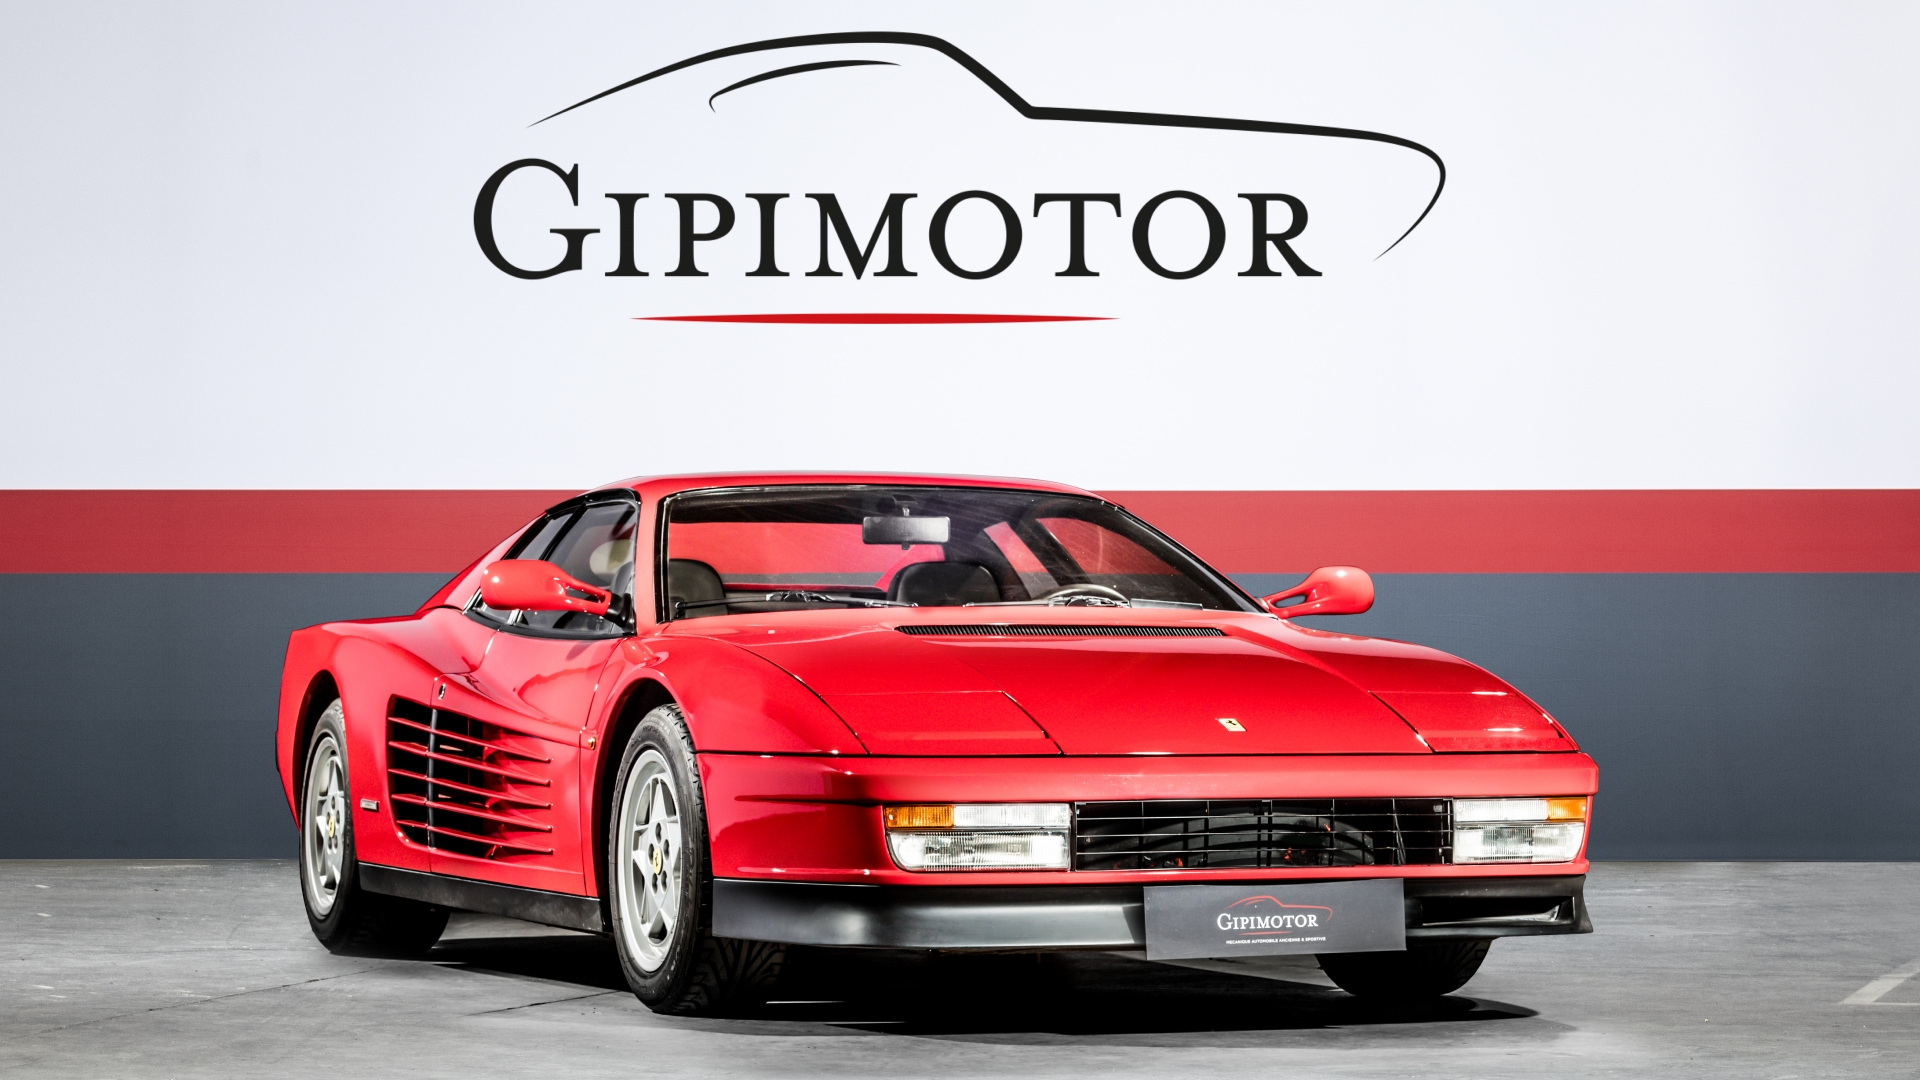 Ferrari - Testarossa · Gipimotor